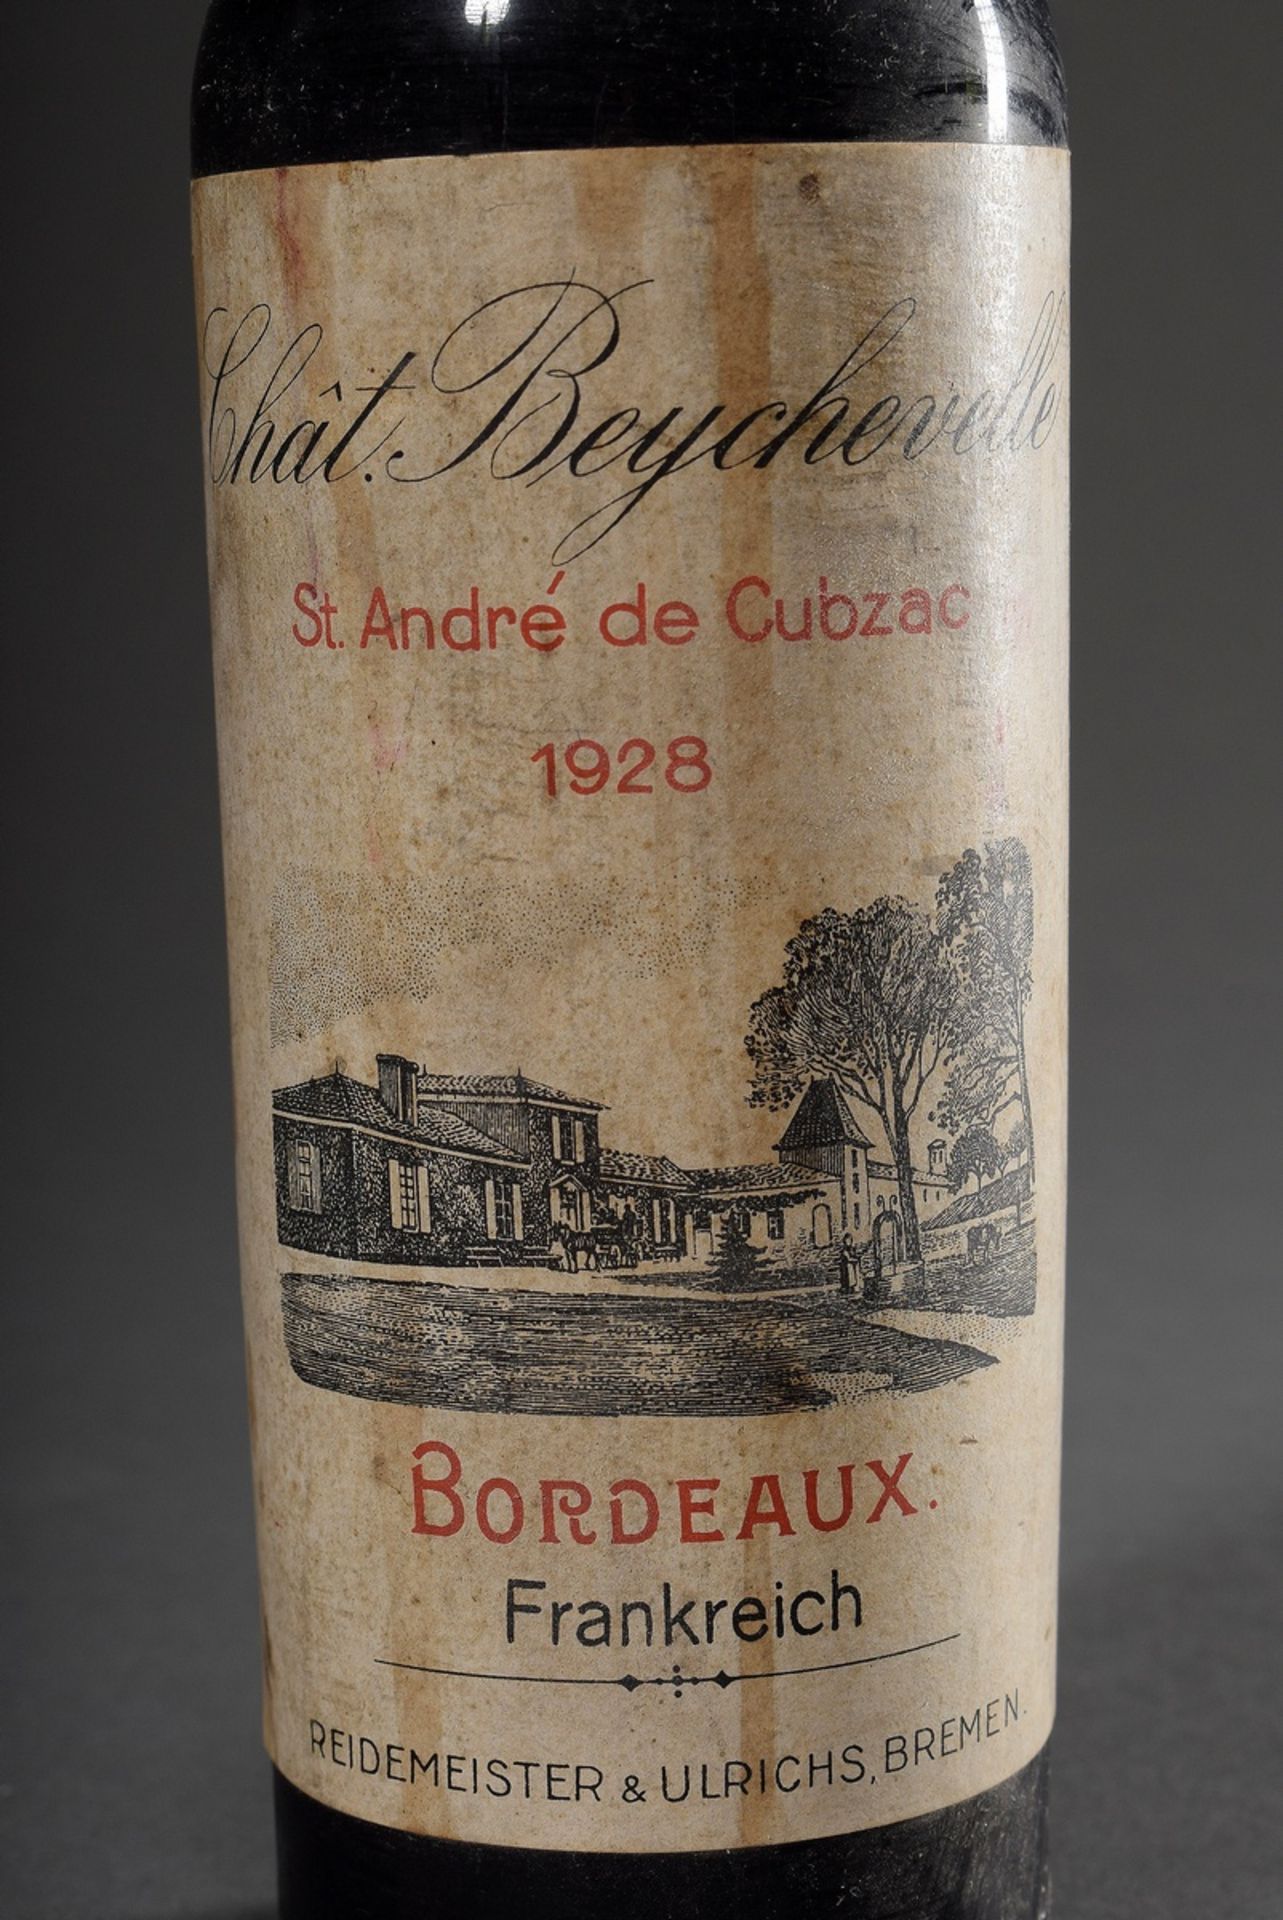 Bottle 1928 Bordeaux red wine "Chateau Beychevelle", St. Andre de Cubzac, 0,375 l, inventory sticke - Image 2 of 4